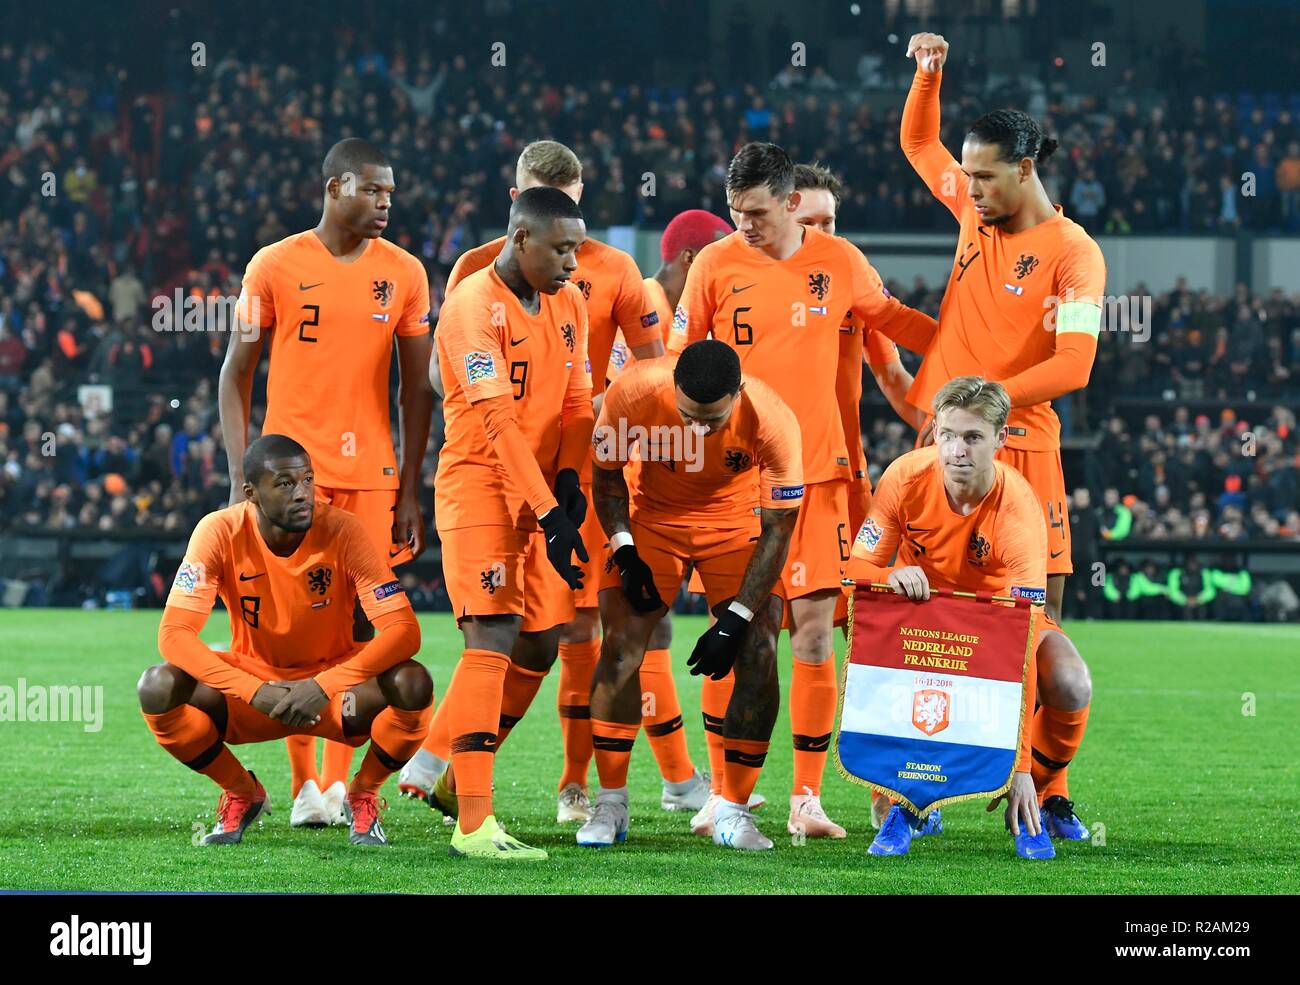 Nederlands elftal hi-res stock photography and images - Alamy